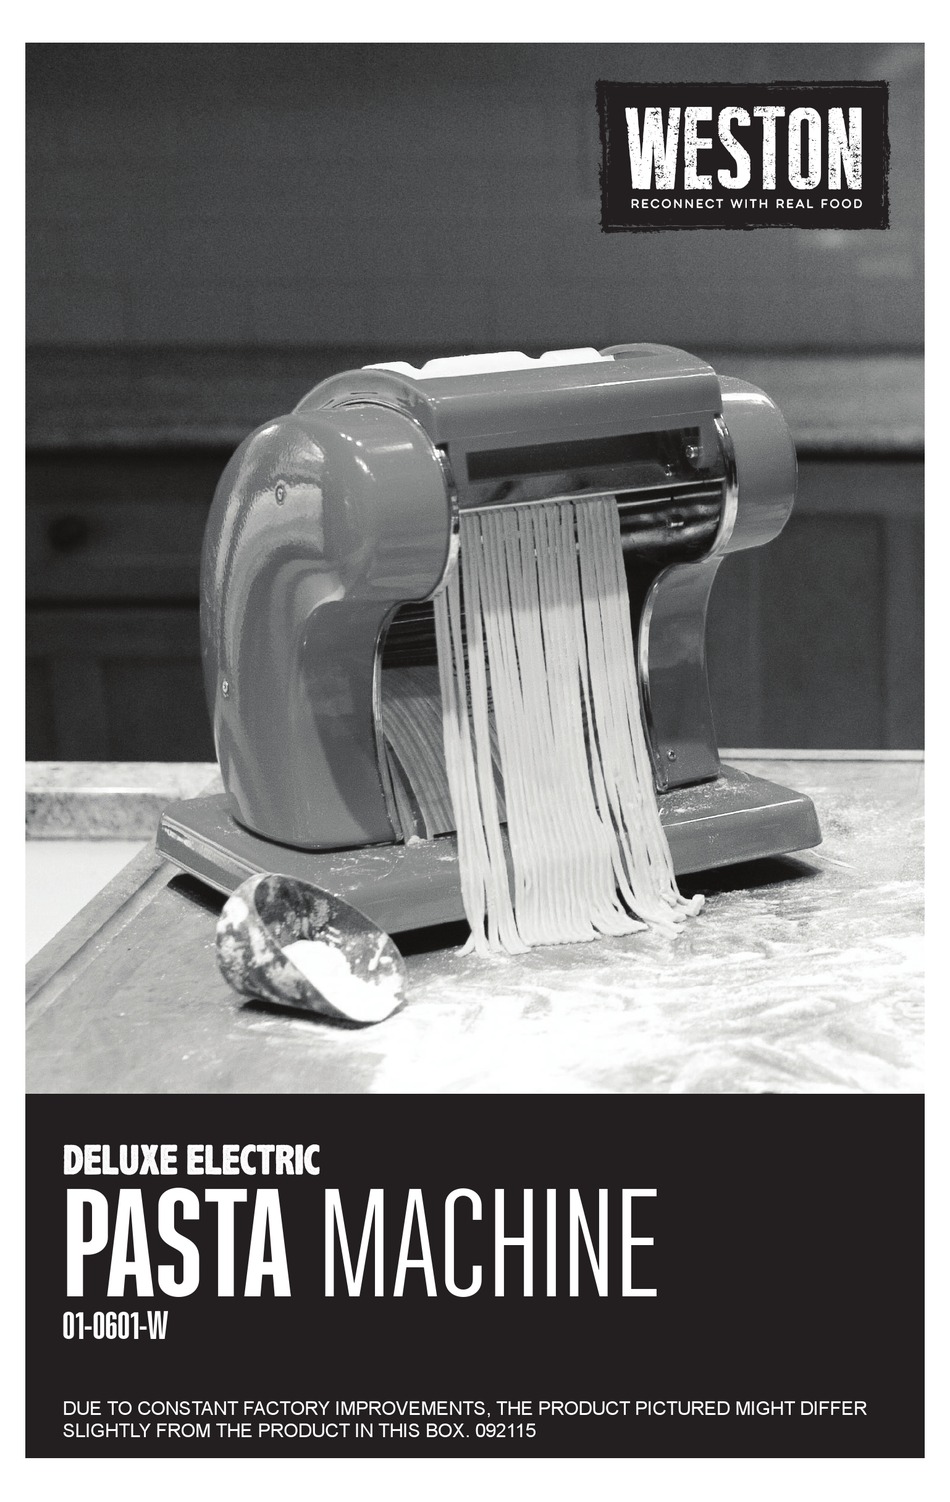 Weston Electric Pasta Machine - 01-0601-W